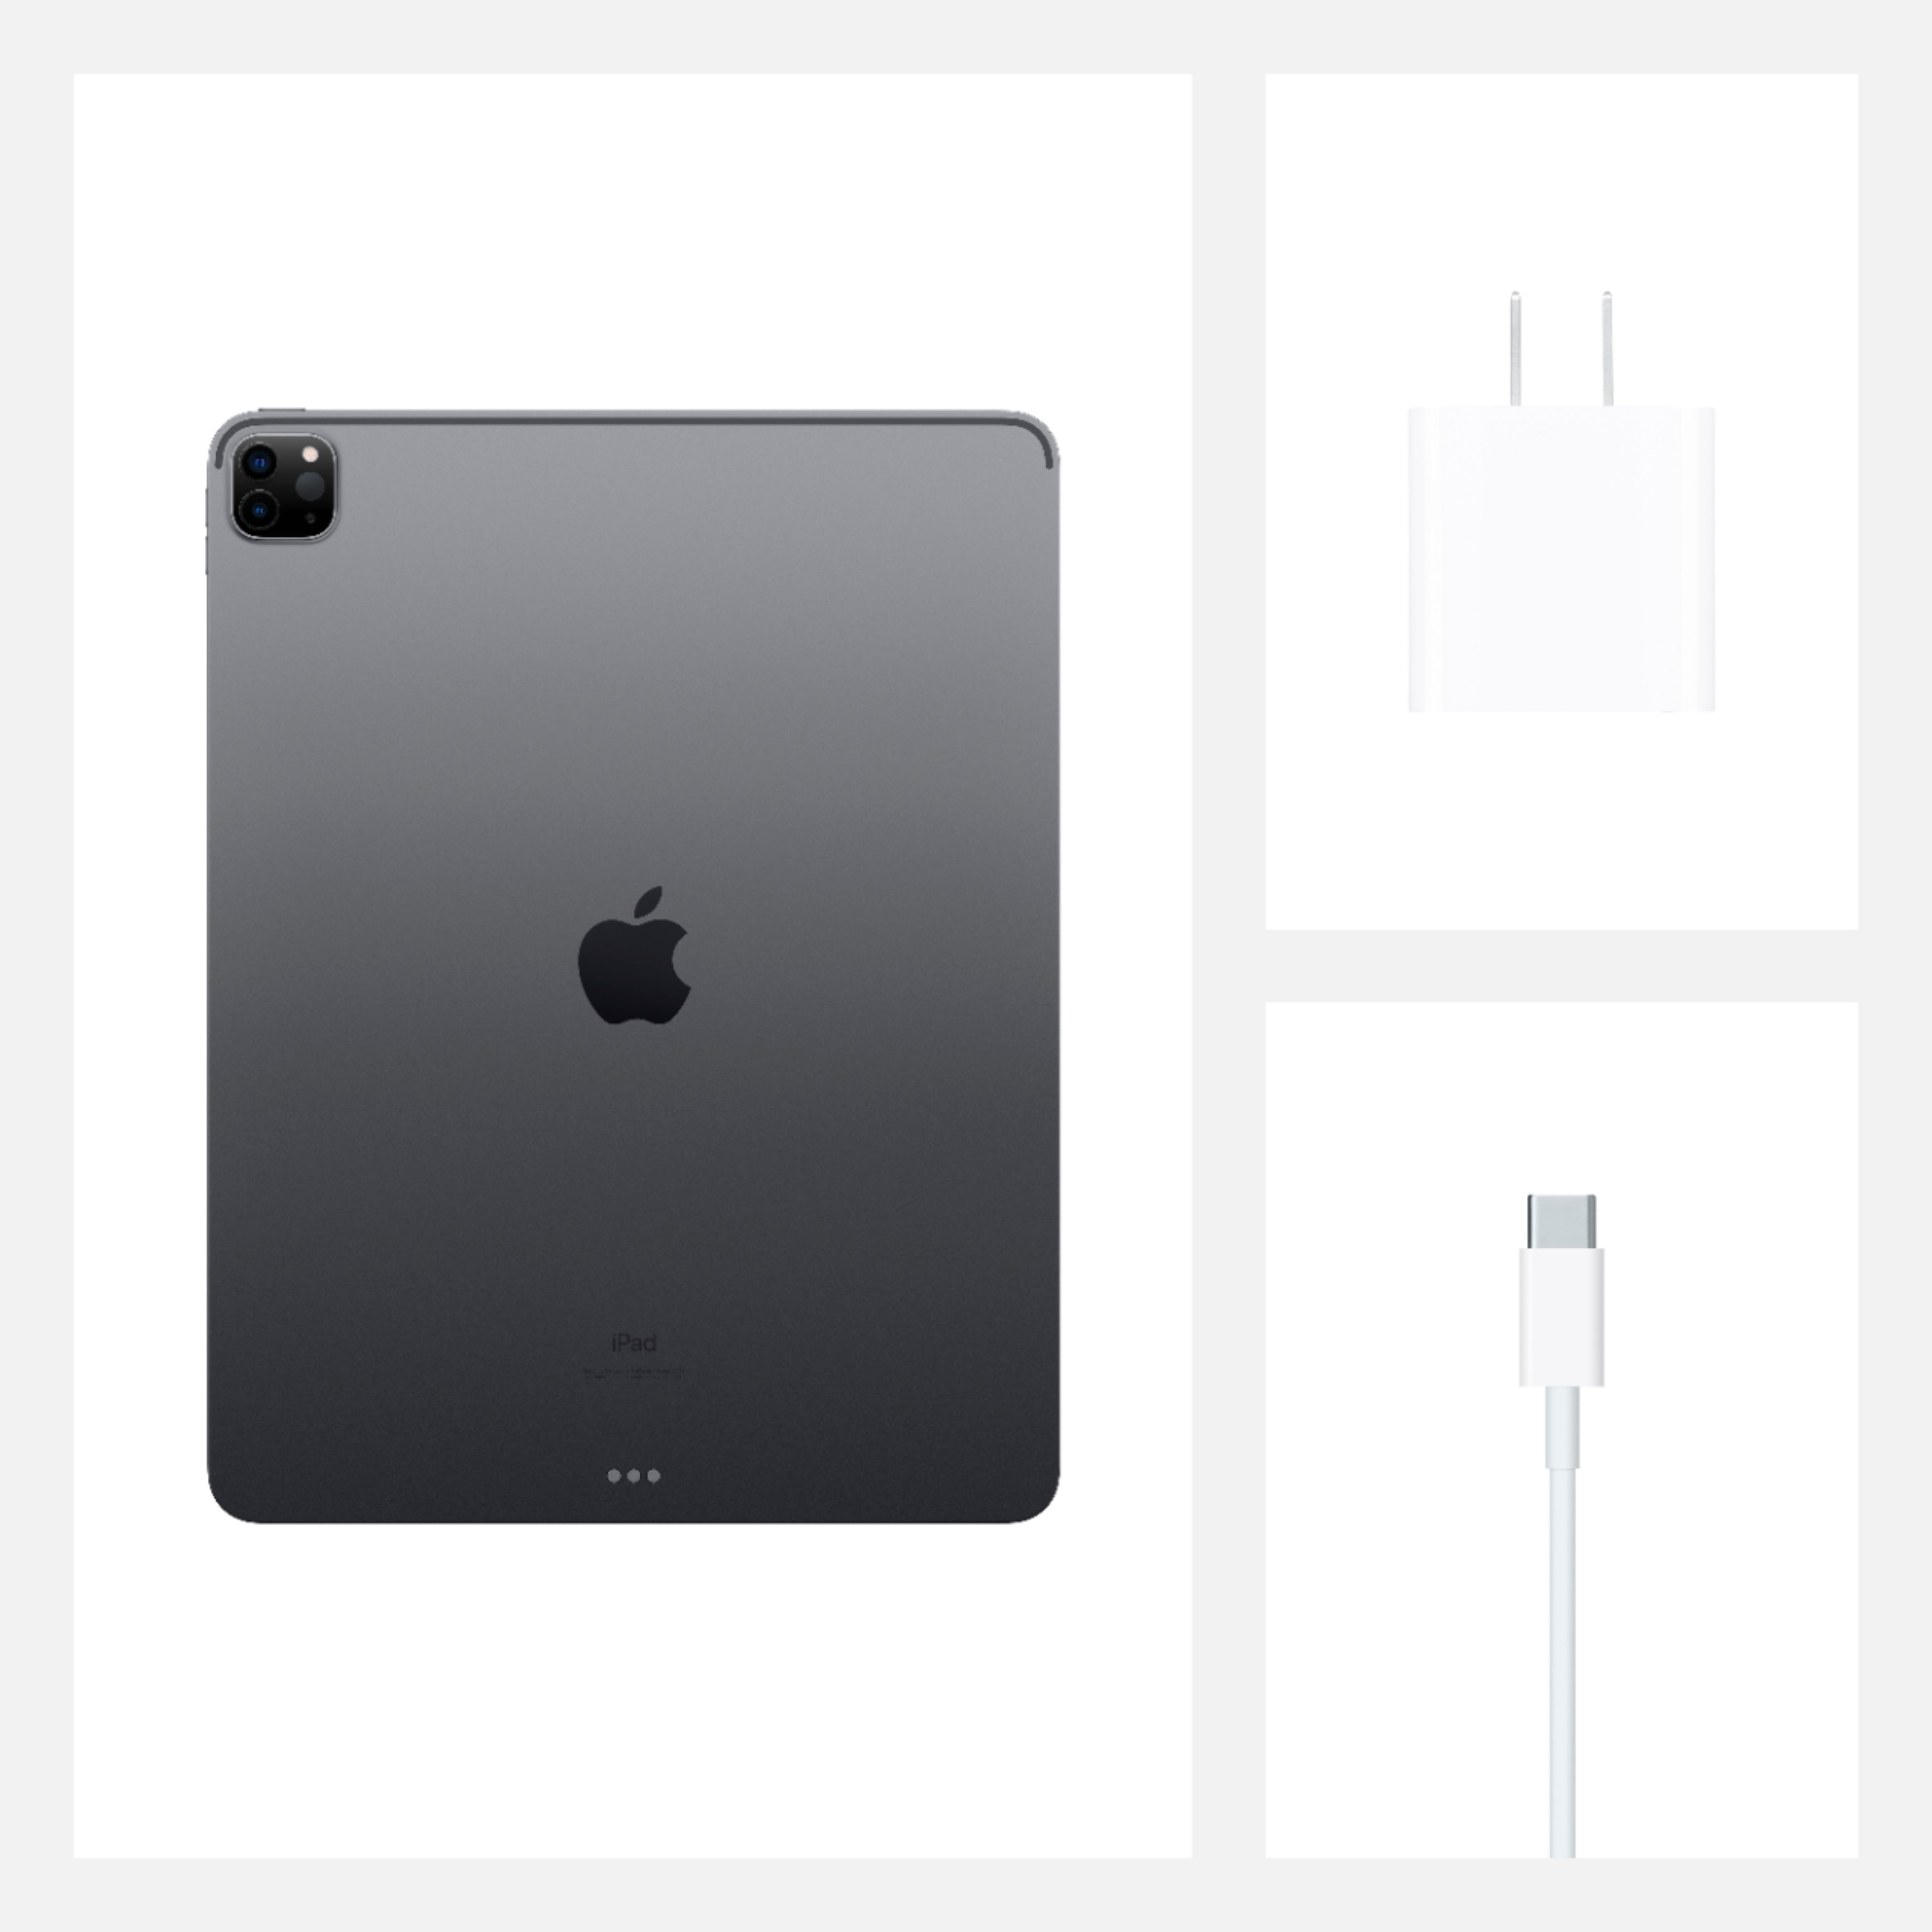 Apple iPad Pro 12.9-inch (2nd Gen) Wi-Fi + Cellular (256GB)